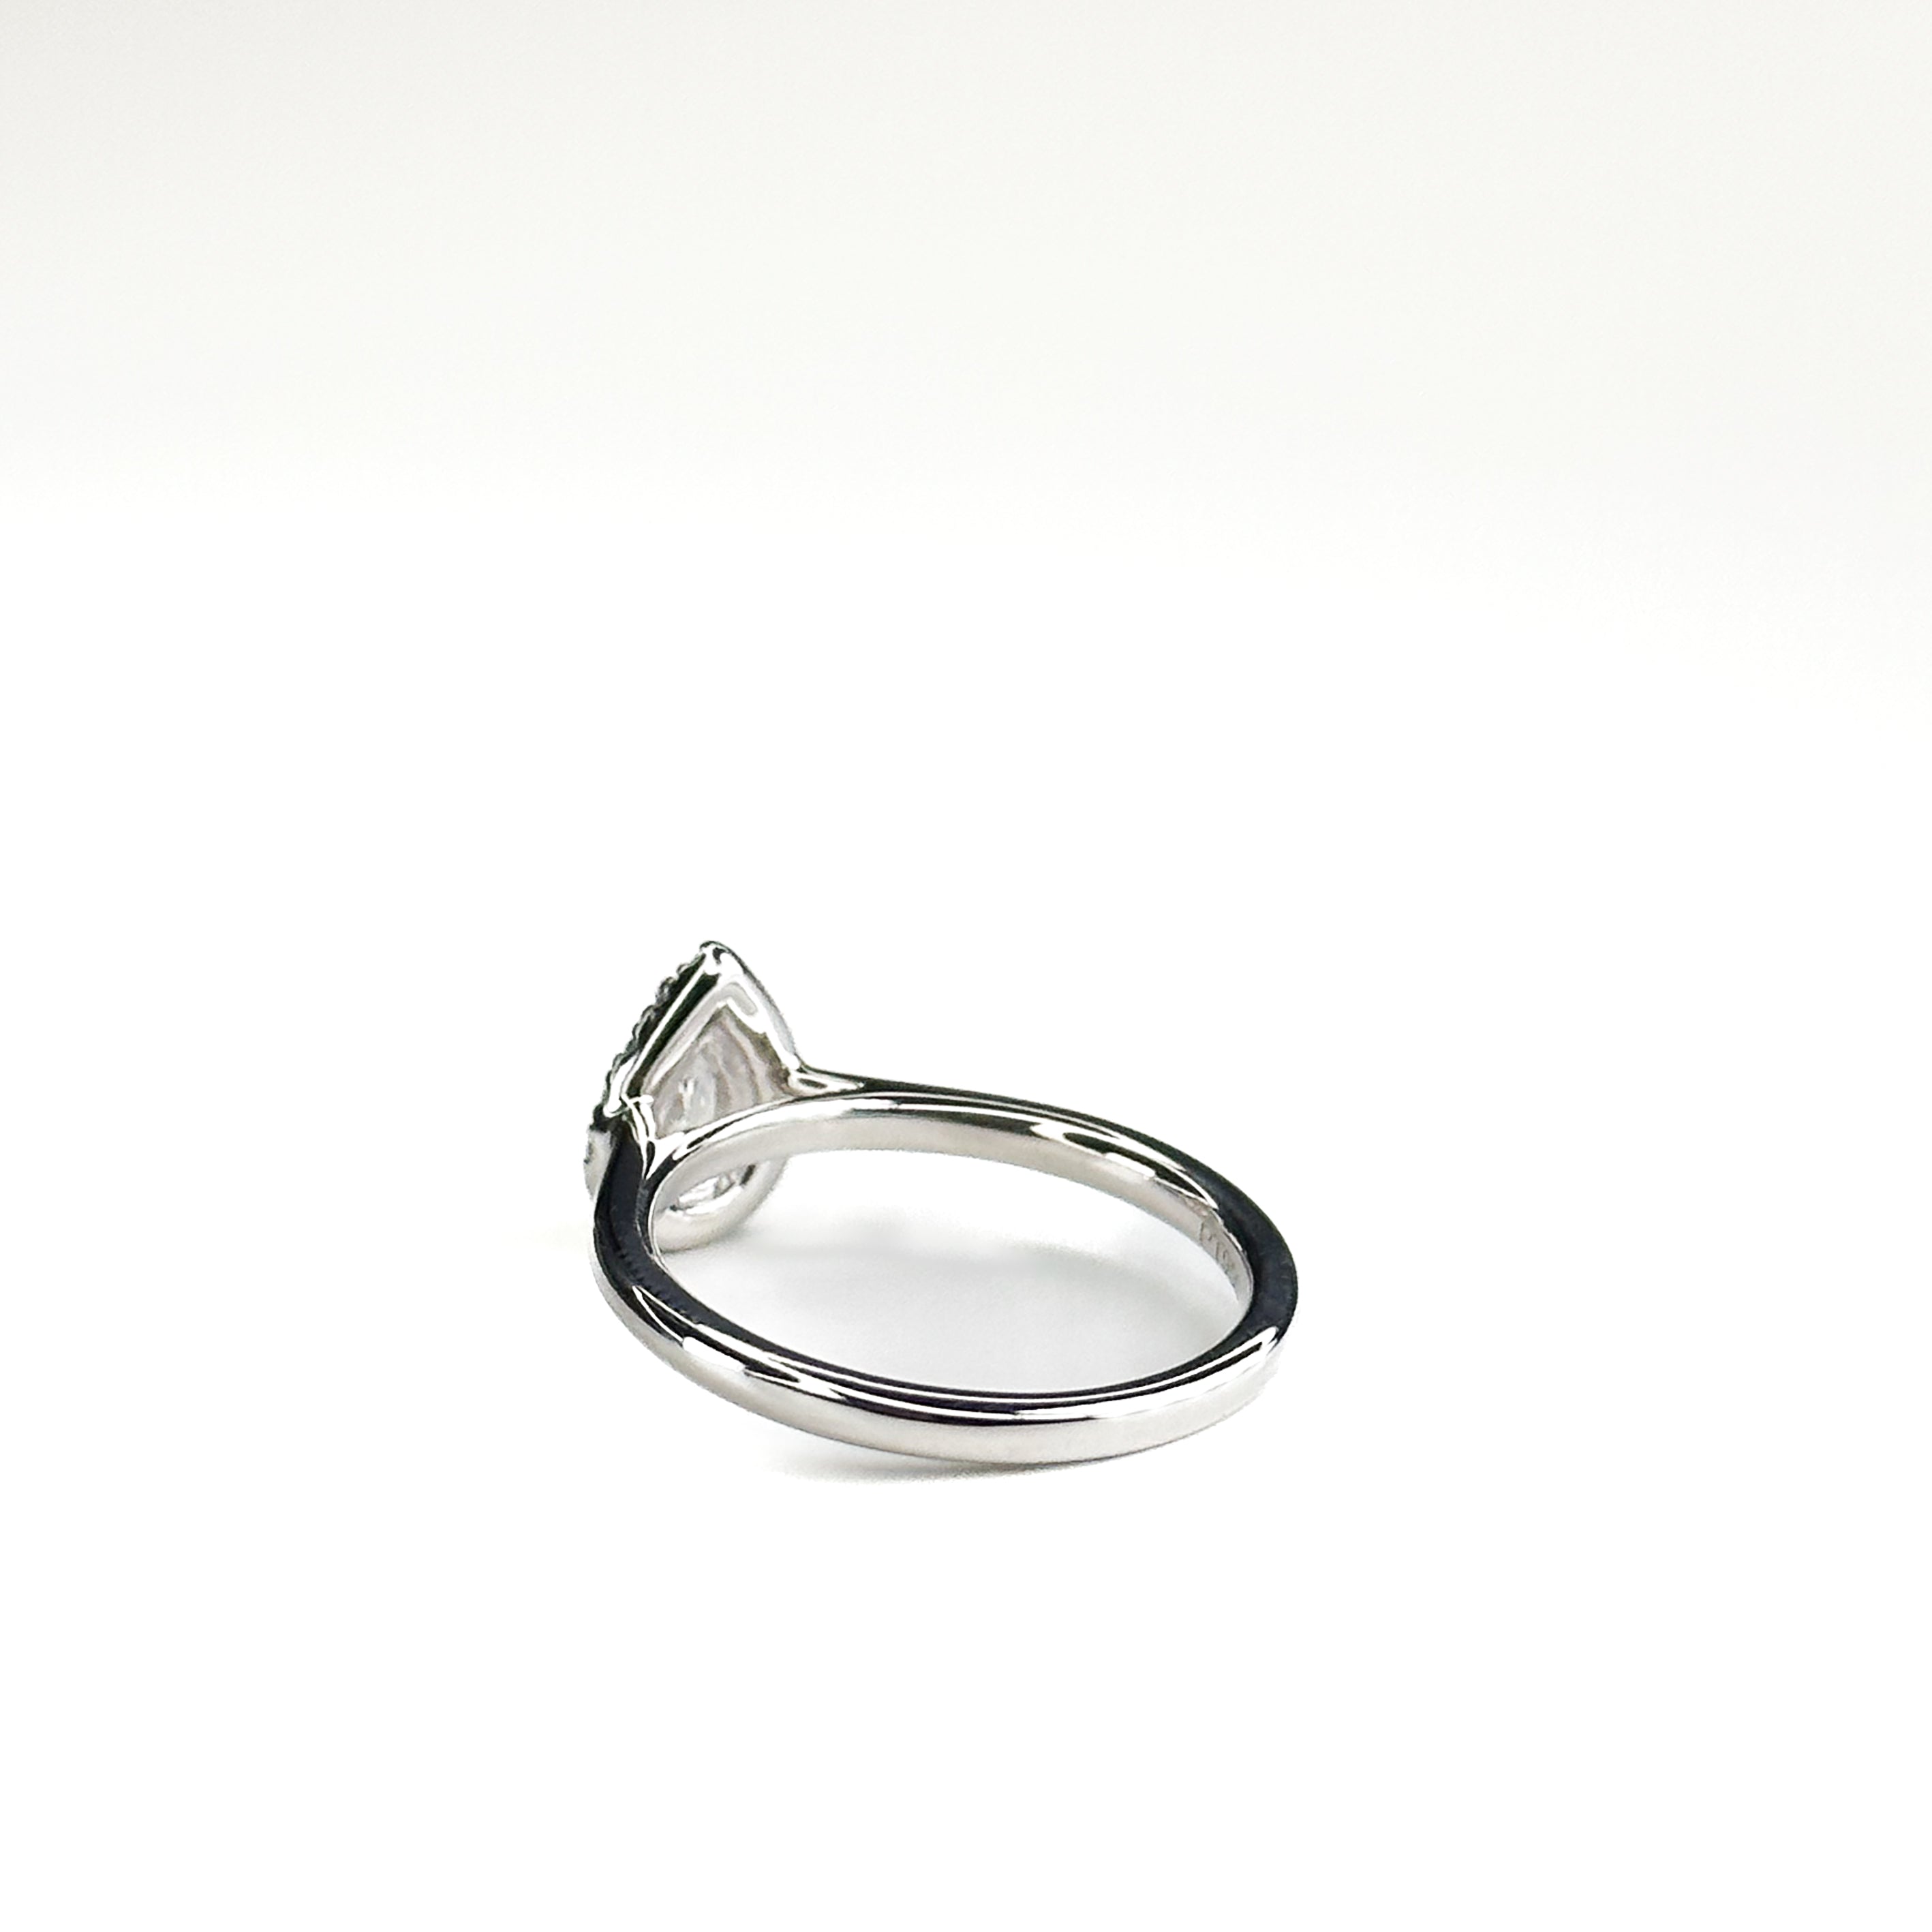 0.31ct Pear Shape Diamond Ring